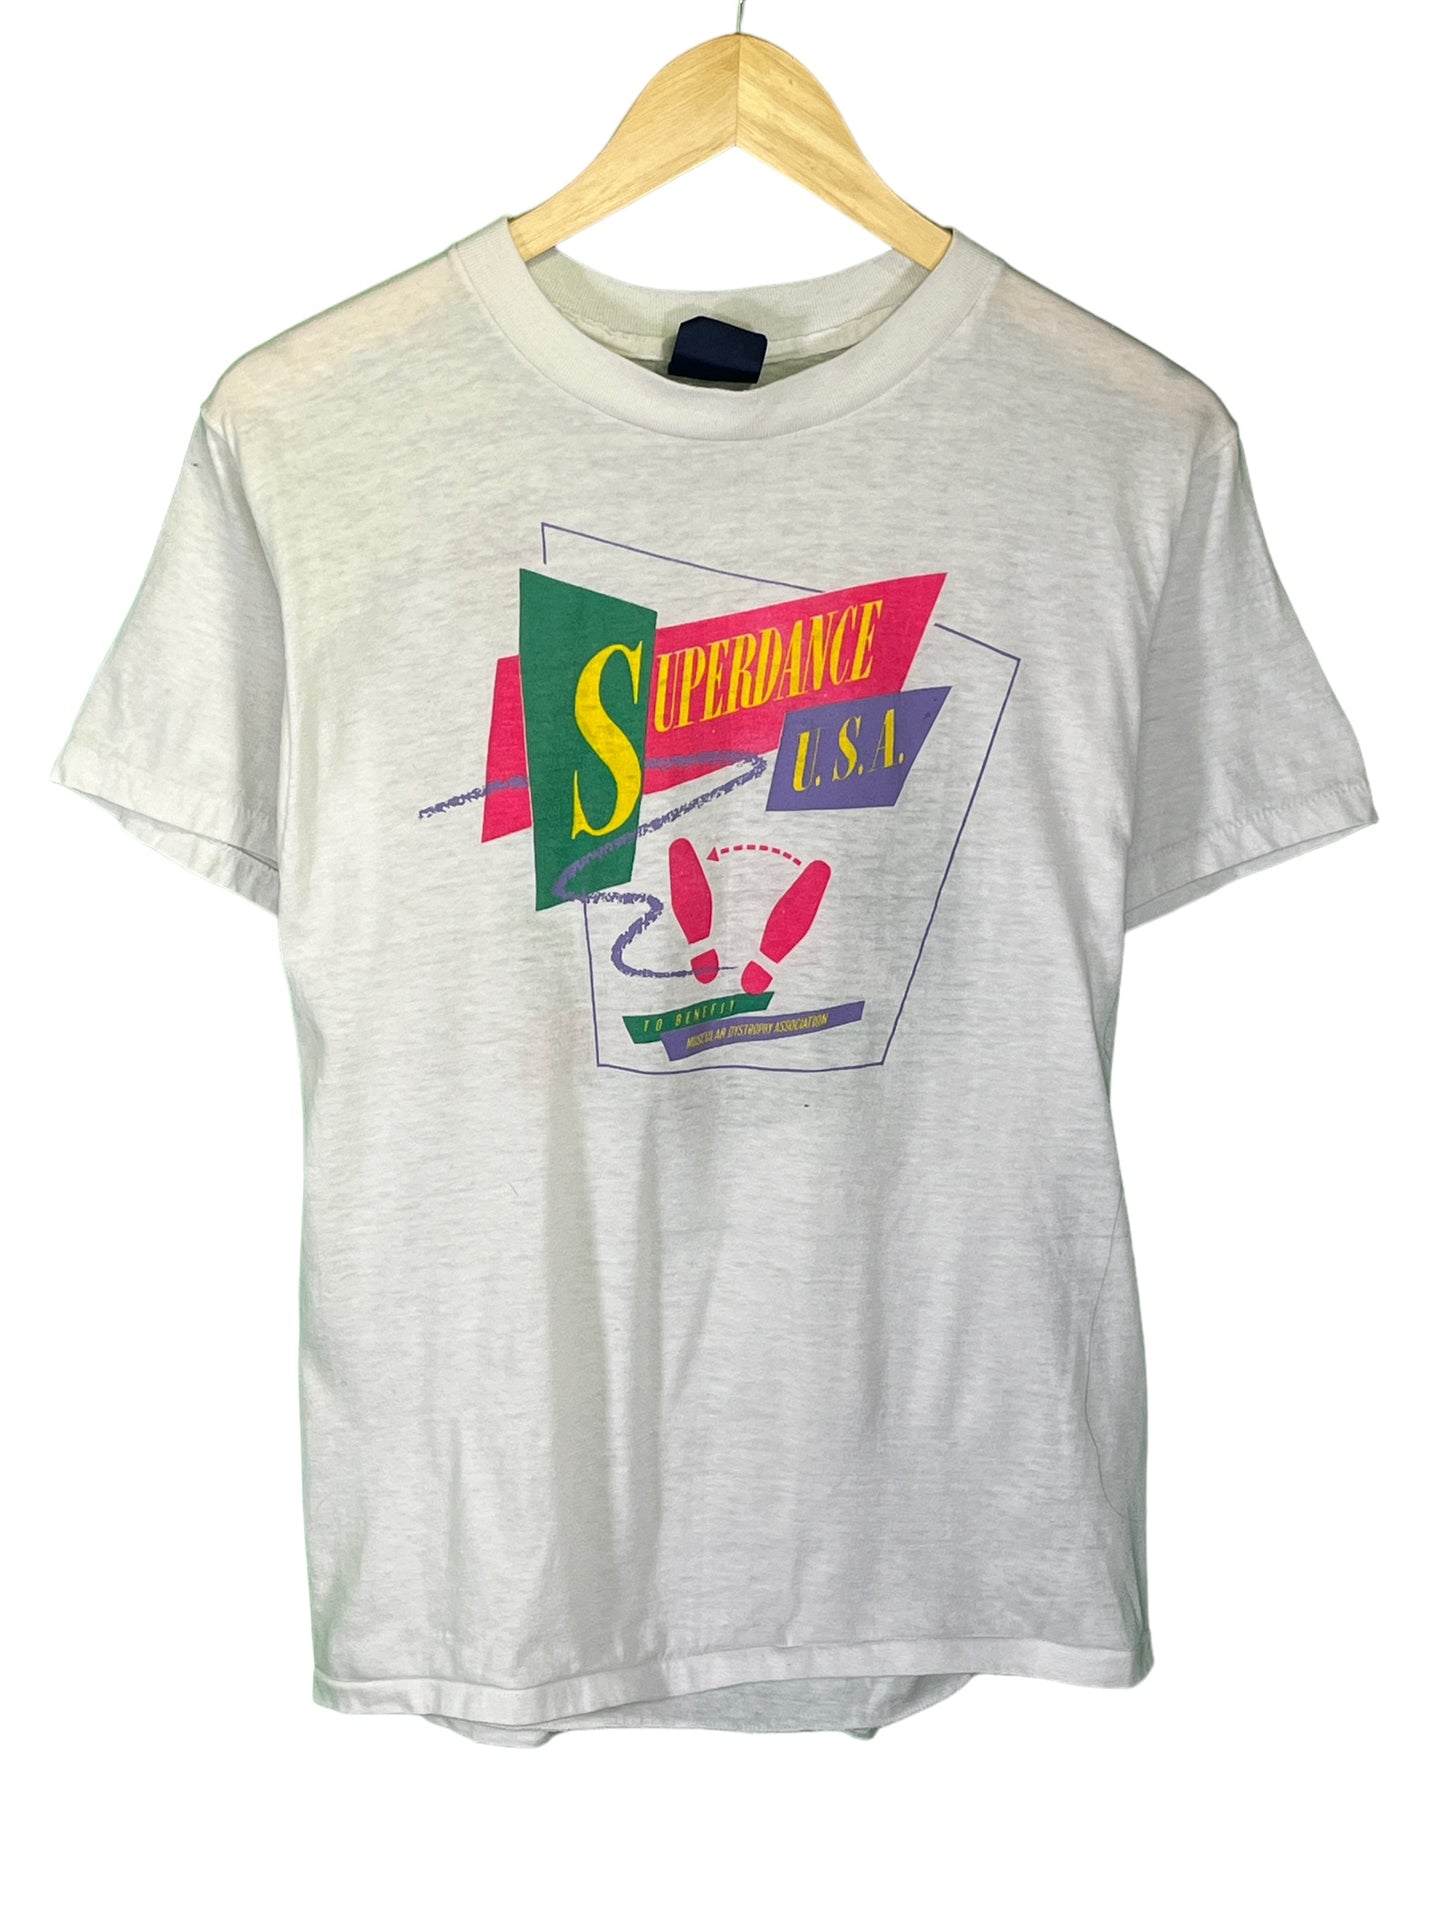 Vintage 80's Superdance USA Rimrock Mall Billings MT Graphic Tee Size Medium